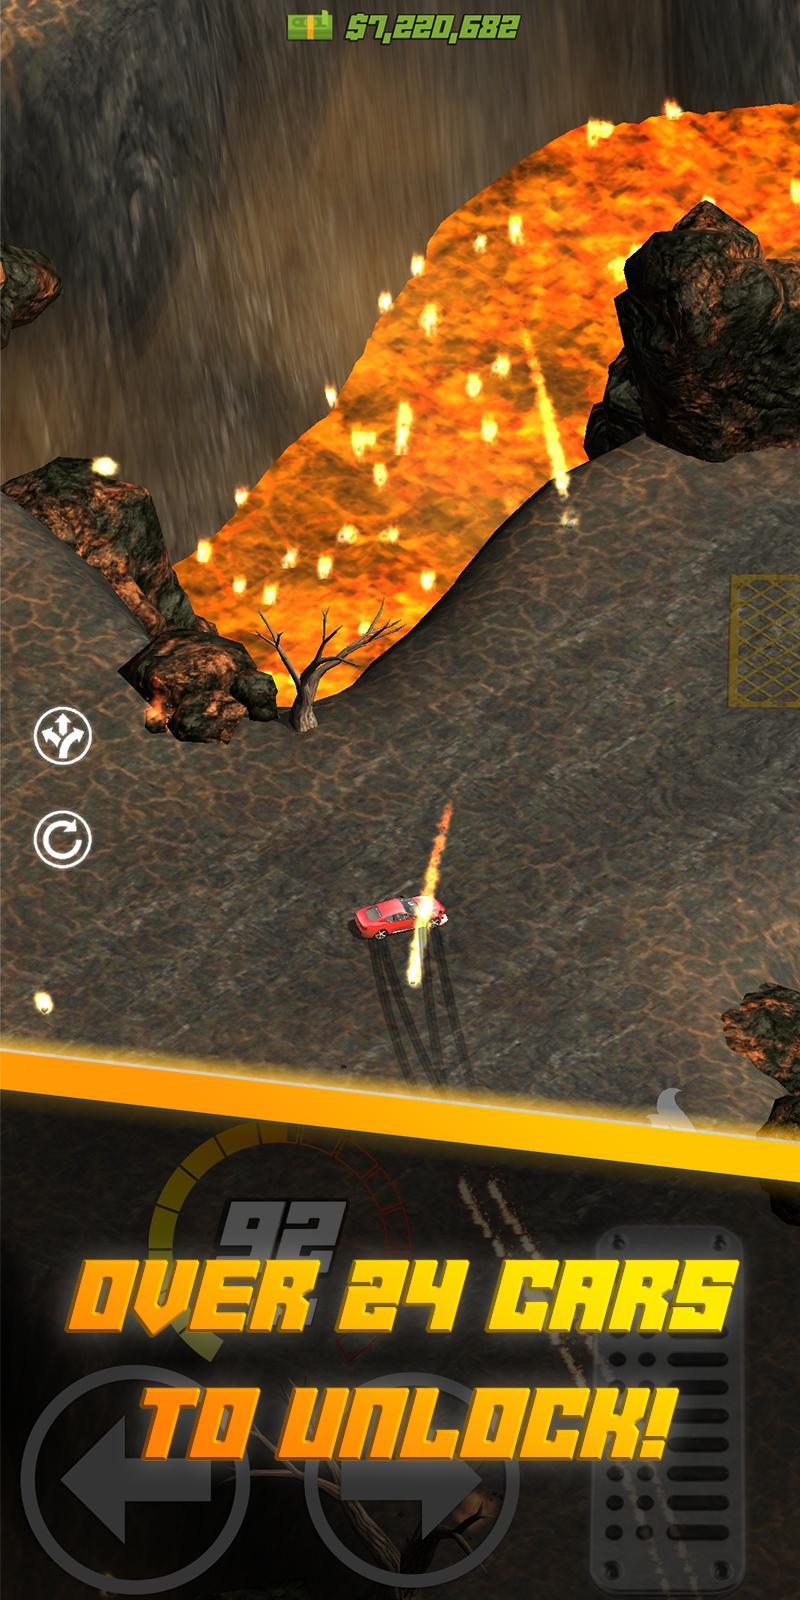 Drift Worlds ⚠️ Real Life Drifting, Arcade Racing 3.3 Screenshot 3